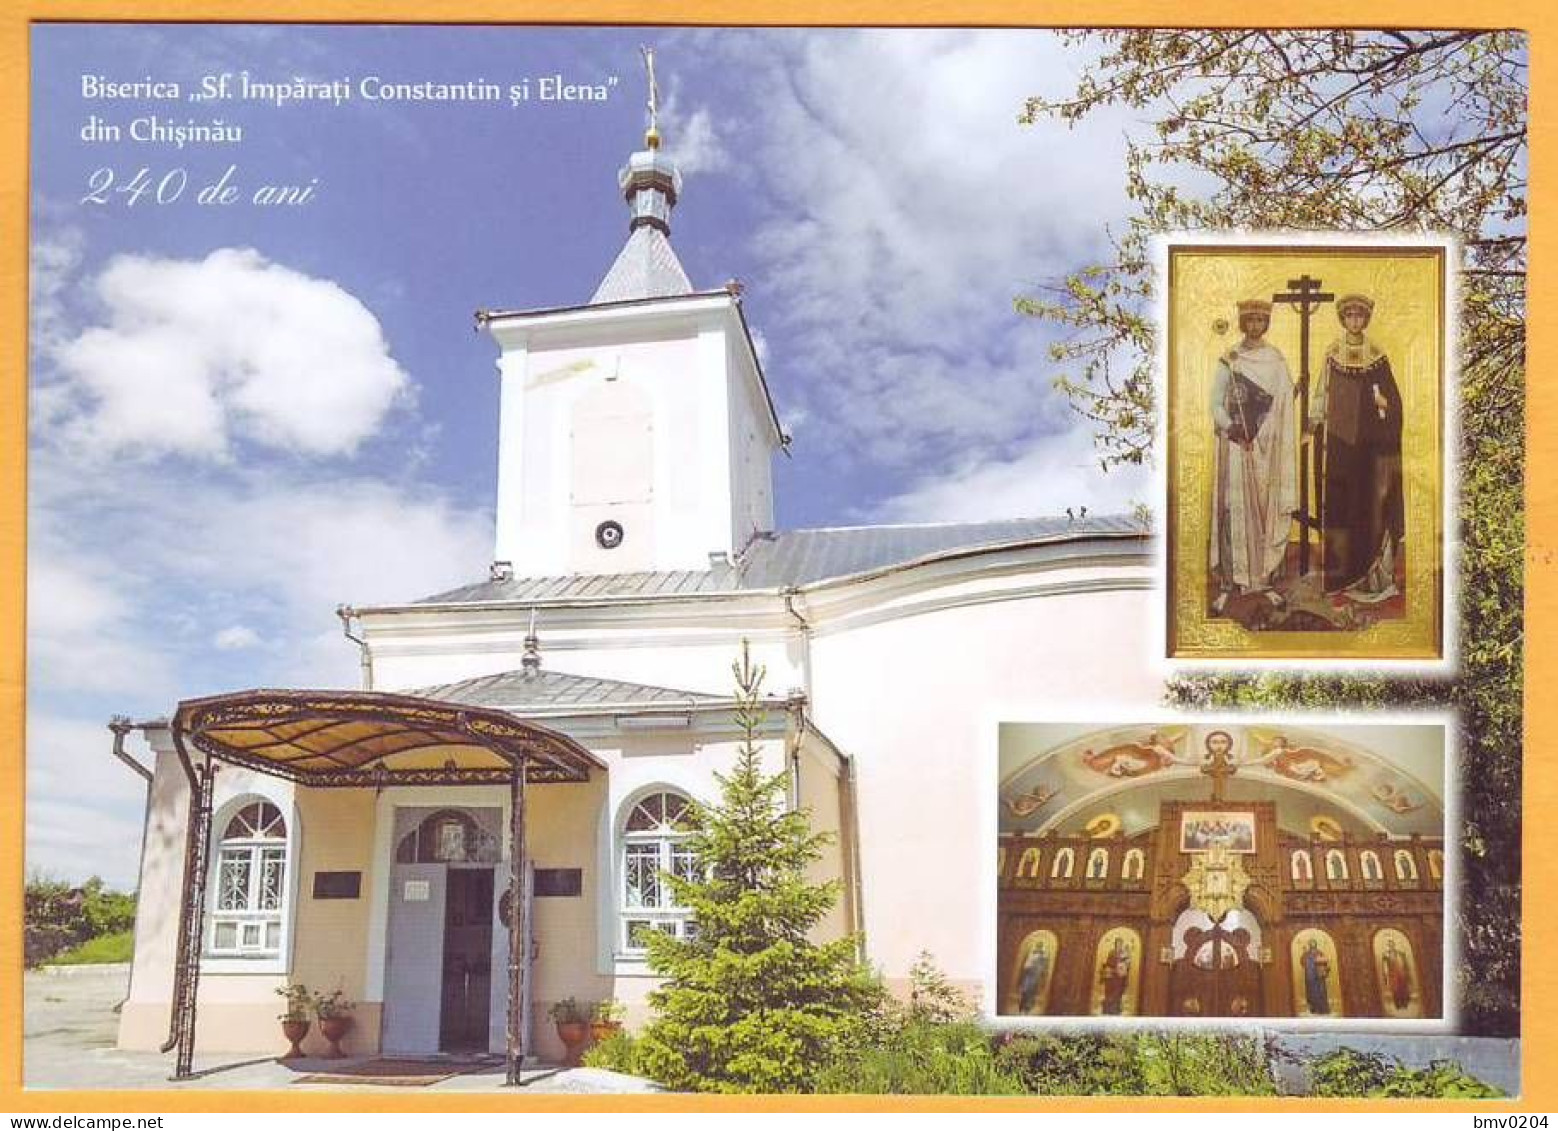 2022 2017 Moldova Special Postmark ”Saints Constantine And Helena” Church Of Chișinău – 245 Years” - Moldavia